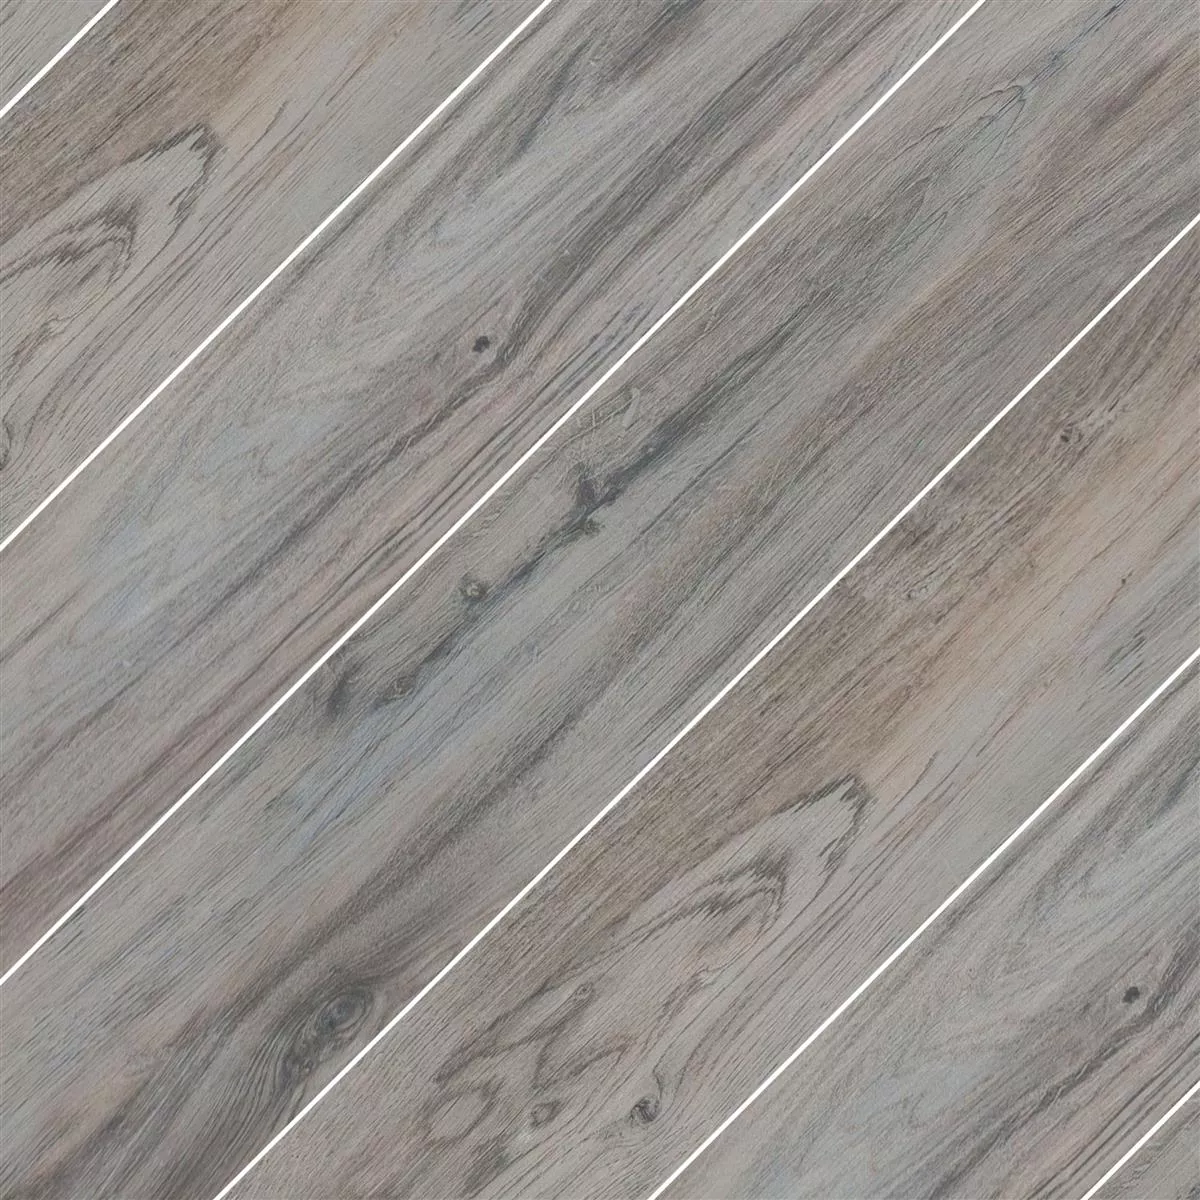 Sample Floor Tiles Wood Optic Fullwood Grey 20x120cm